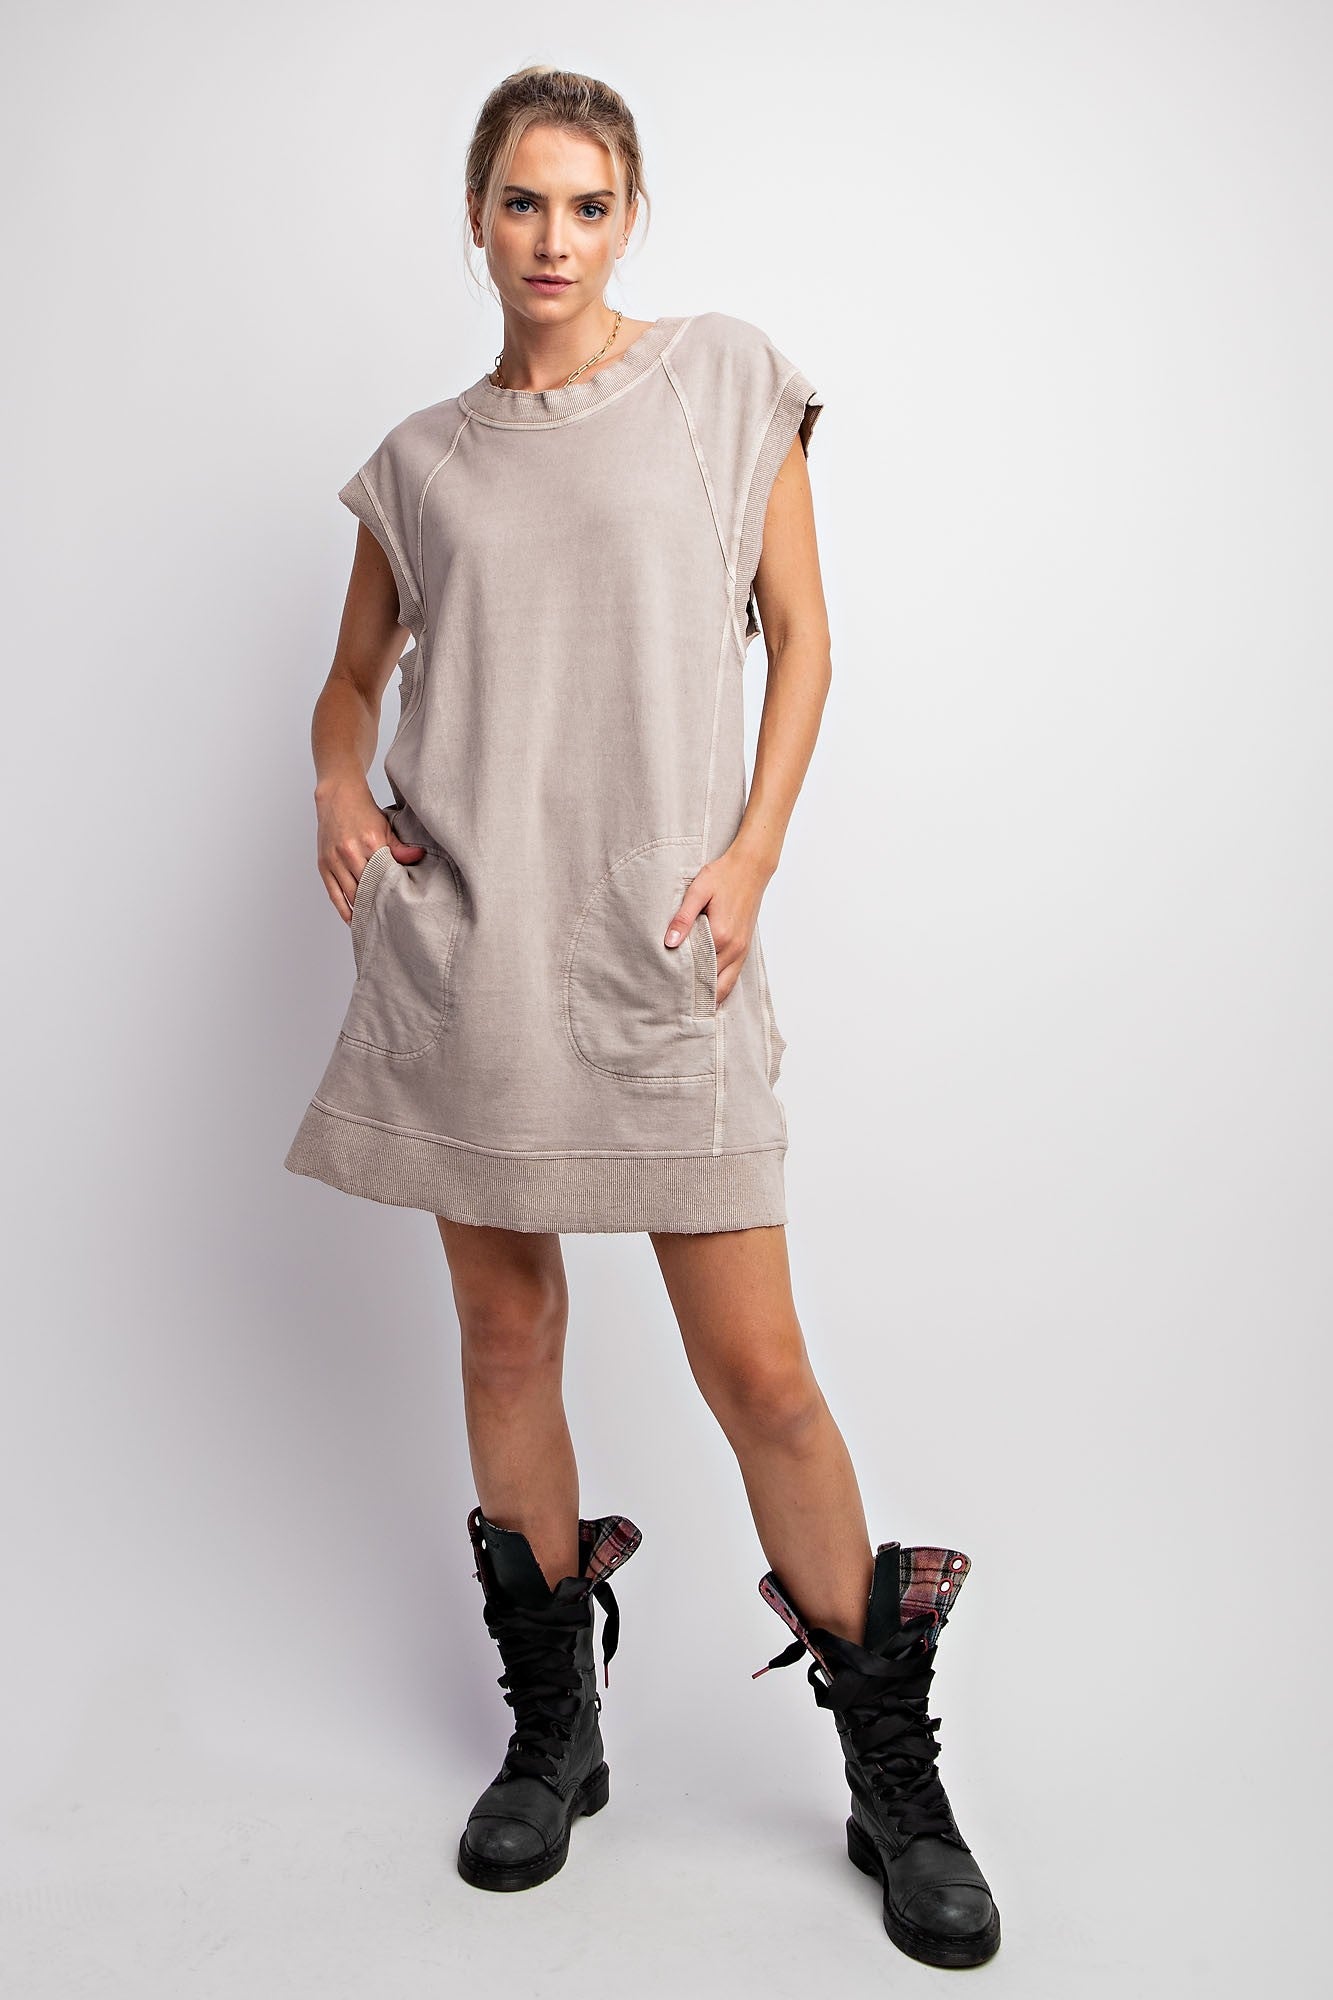 Easel Solid Color Short Terry Knit Dress in Mushroom – June Adel